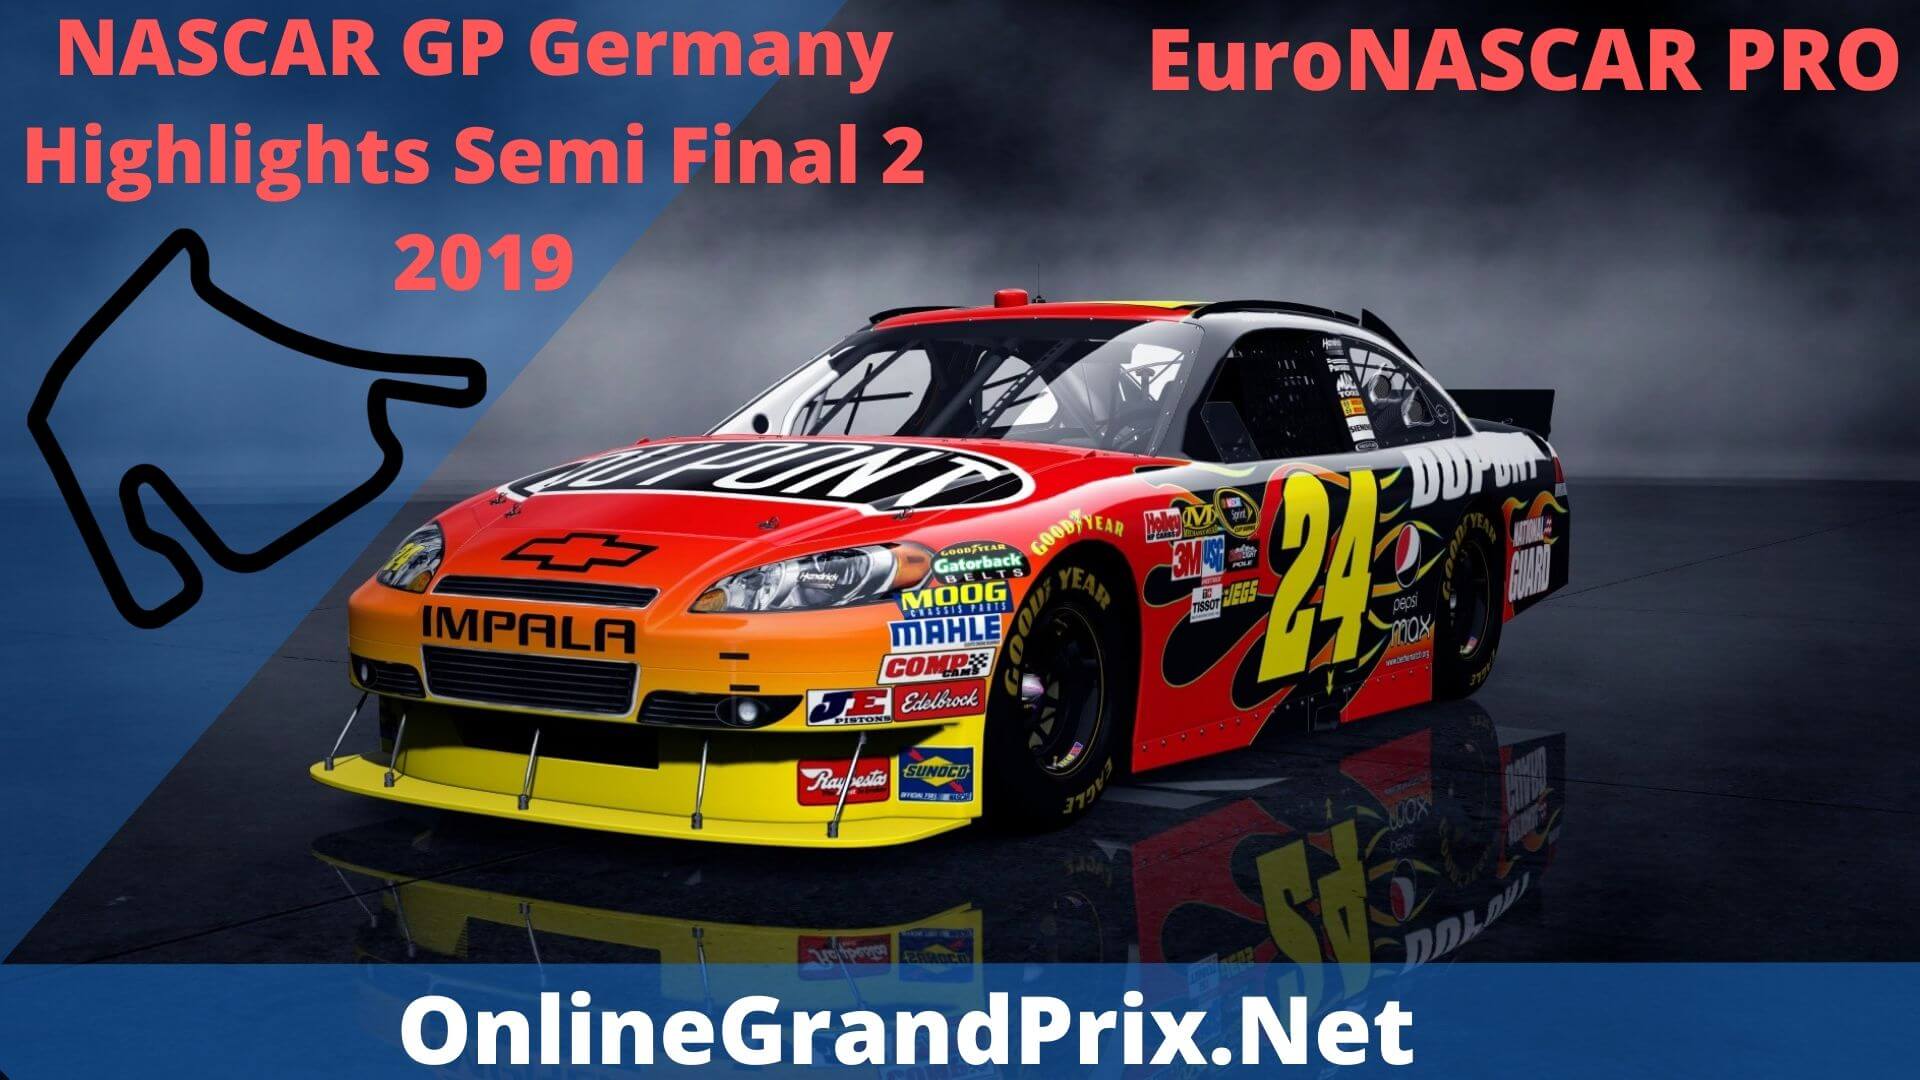 NASCAR GP Germany Semi Final 2 Highlights 2019